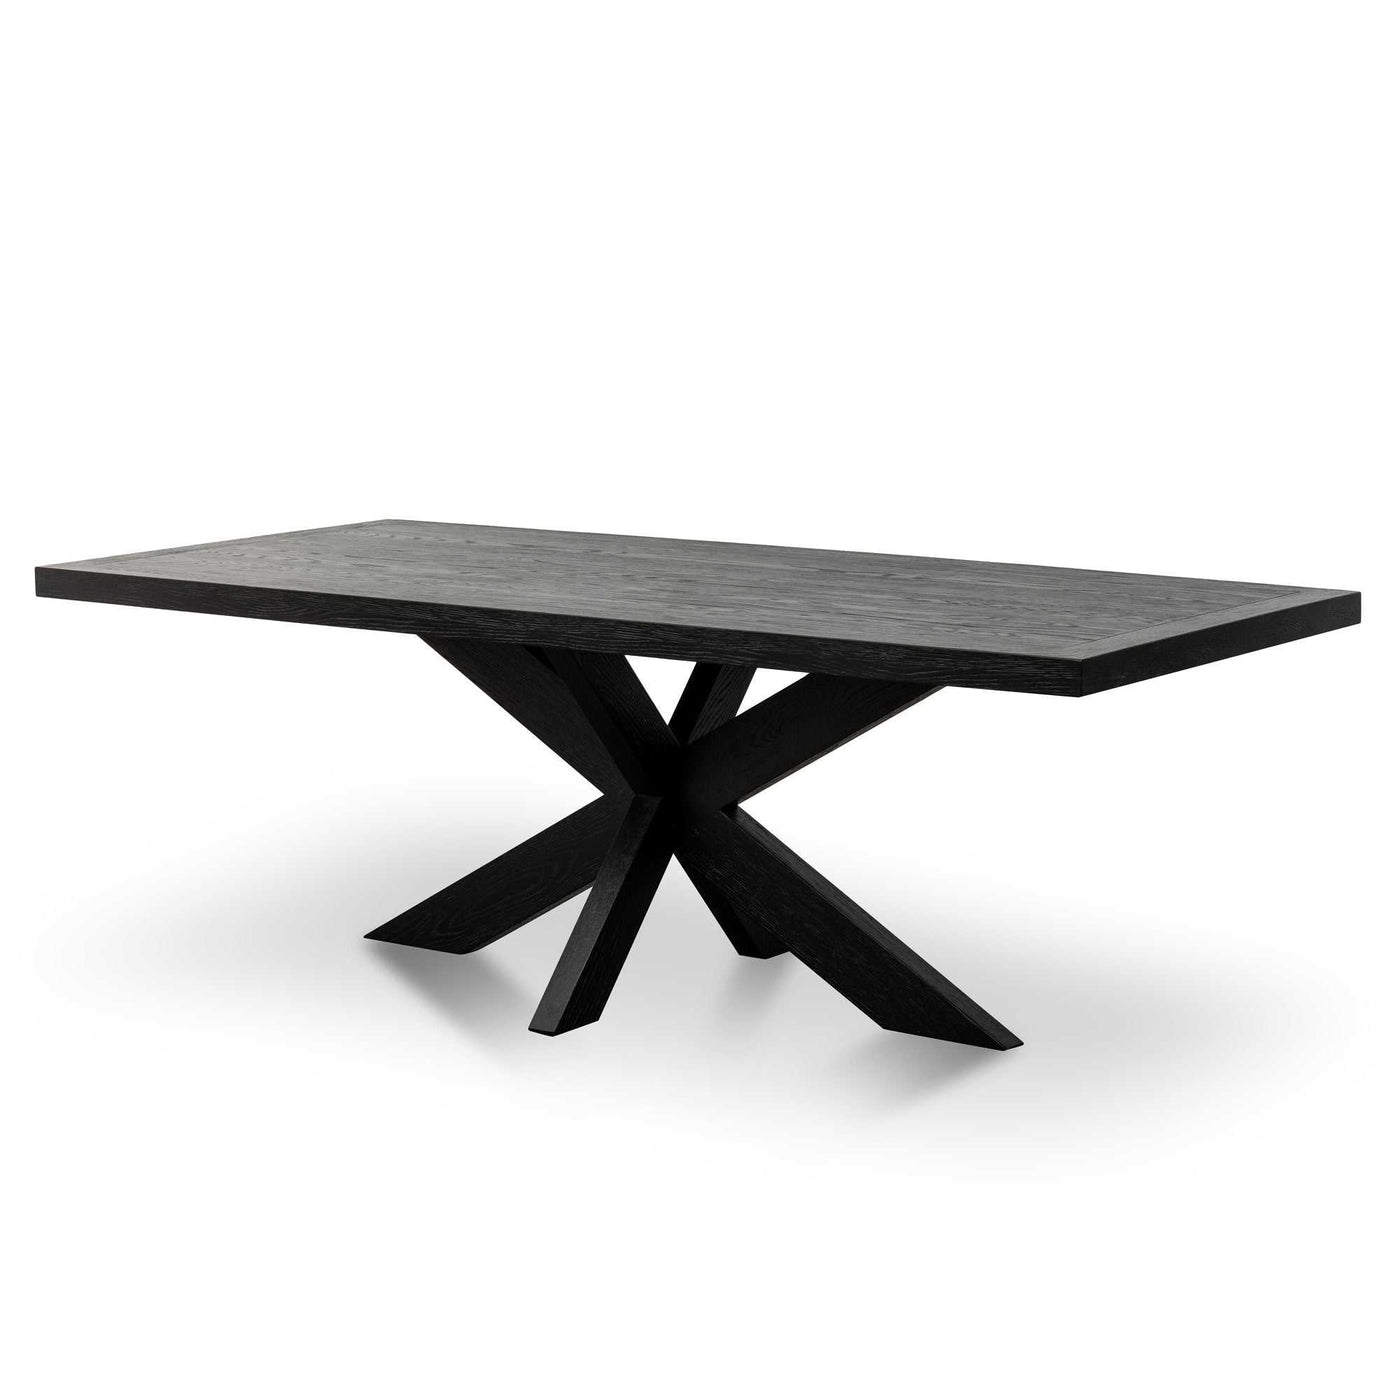 2.2m Wooden Dining Table - Full Black